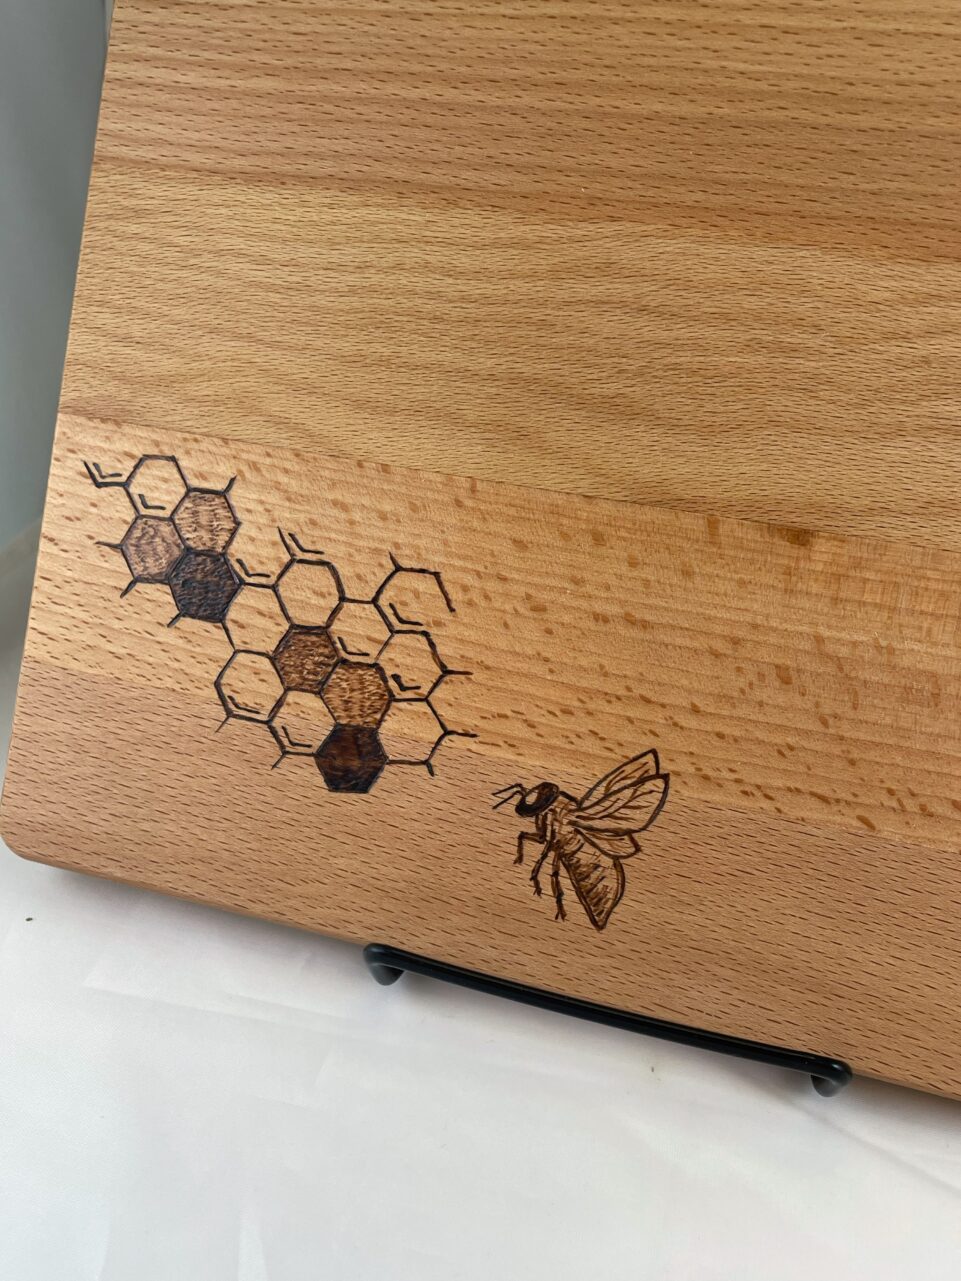 Cutting Boards – Firebee Honey